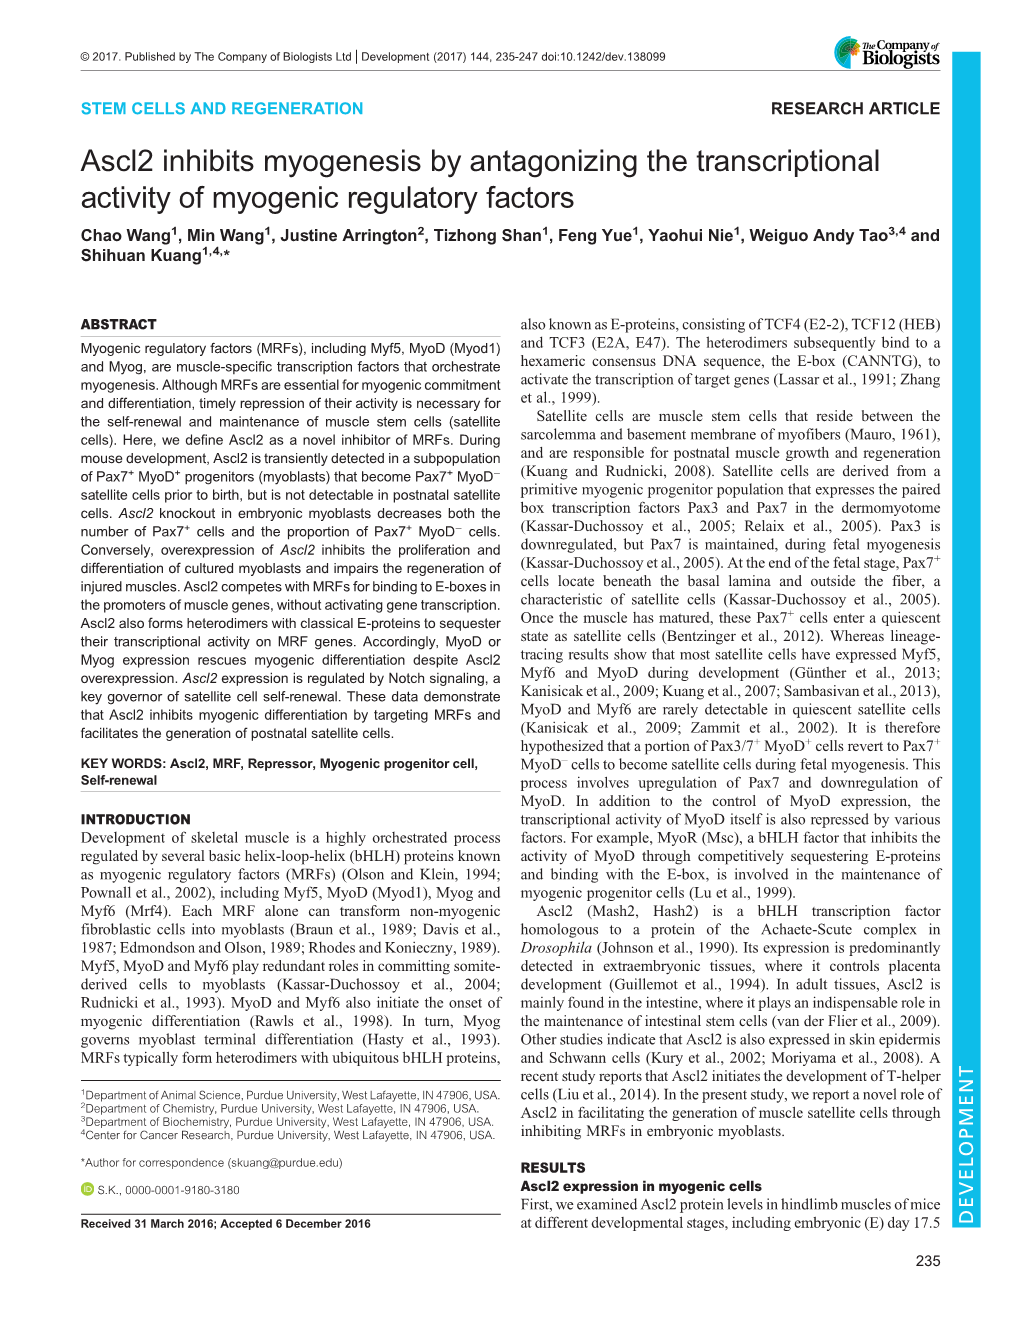 Ascl2 Inhibits Myogenesis by Antagonizing the Transcriptional Activity of Myogenic Regulatory Factors